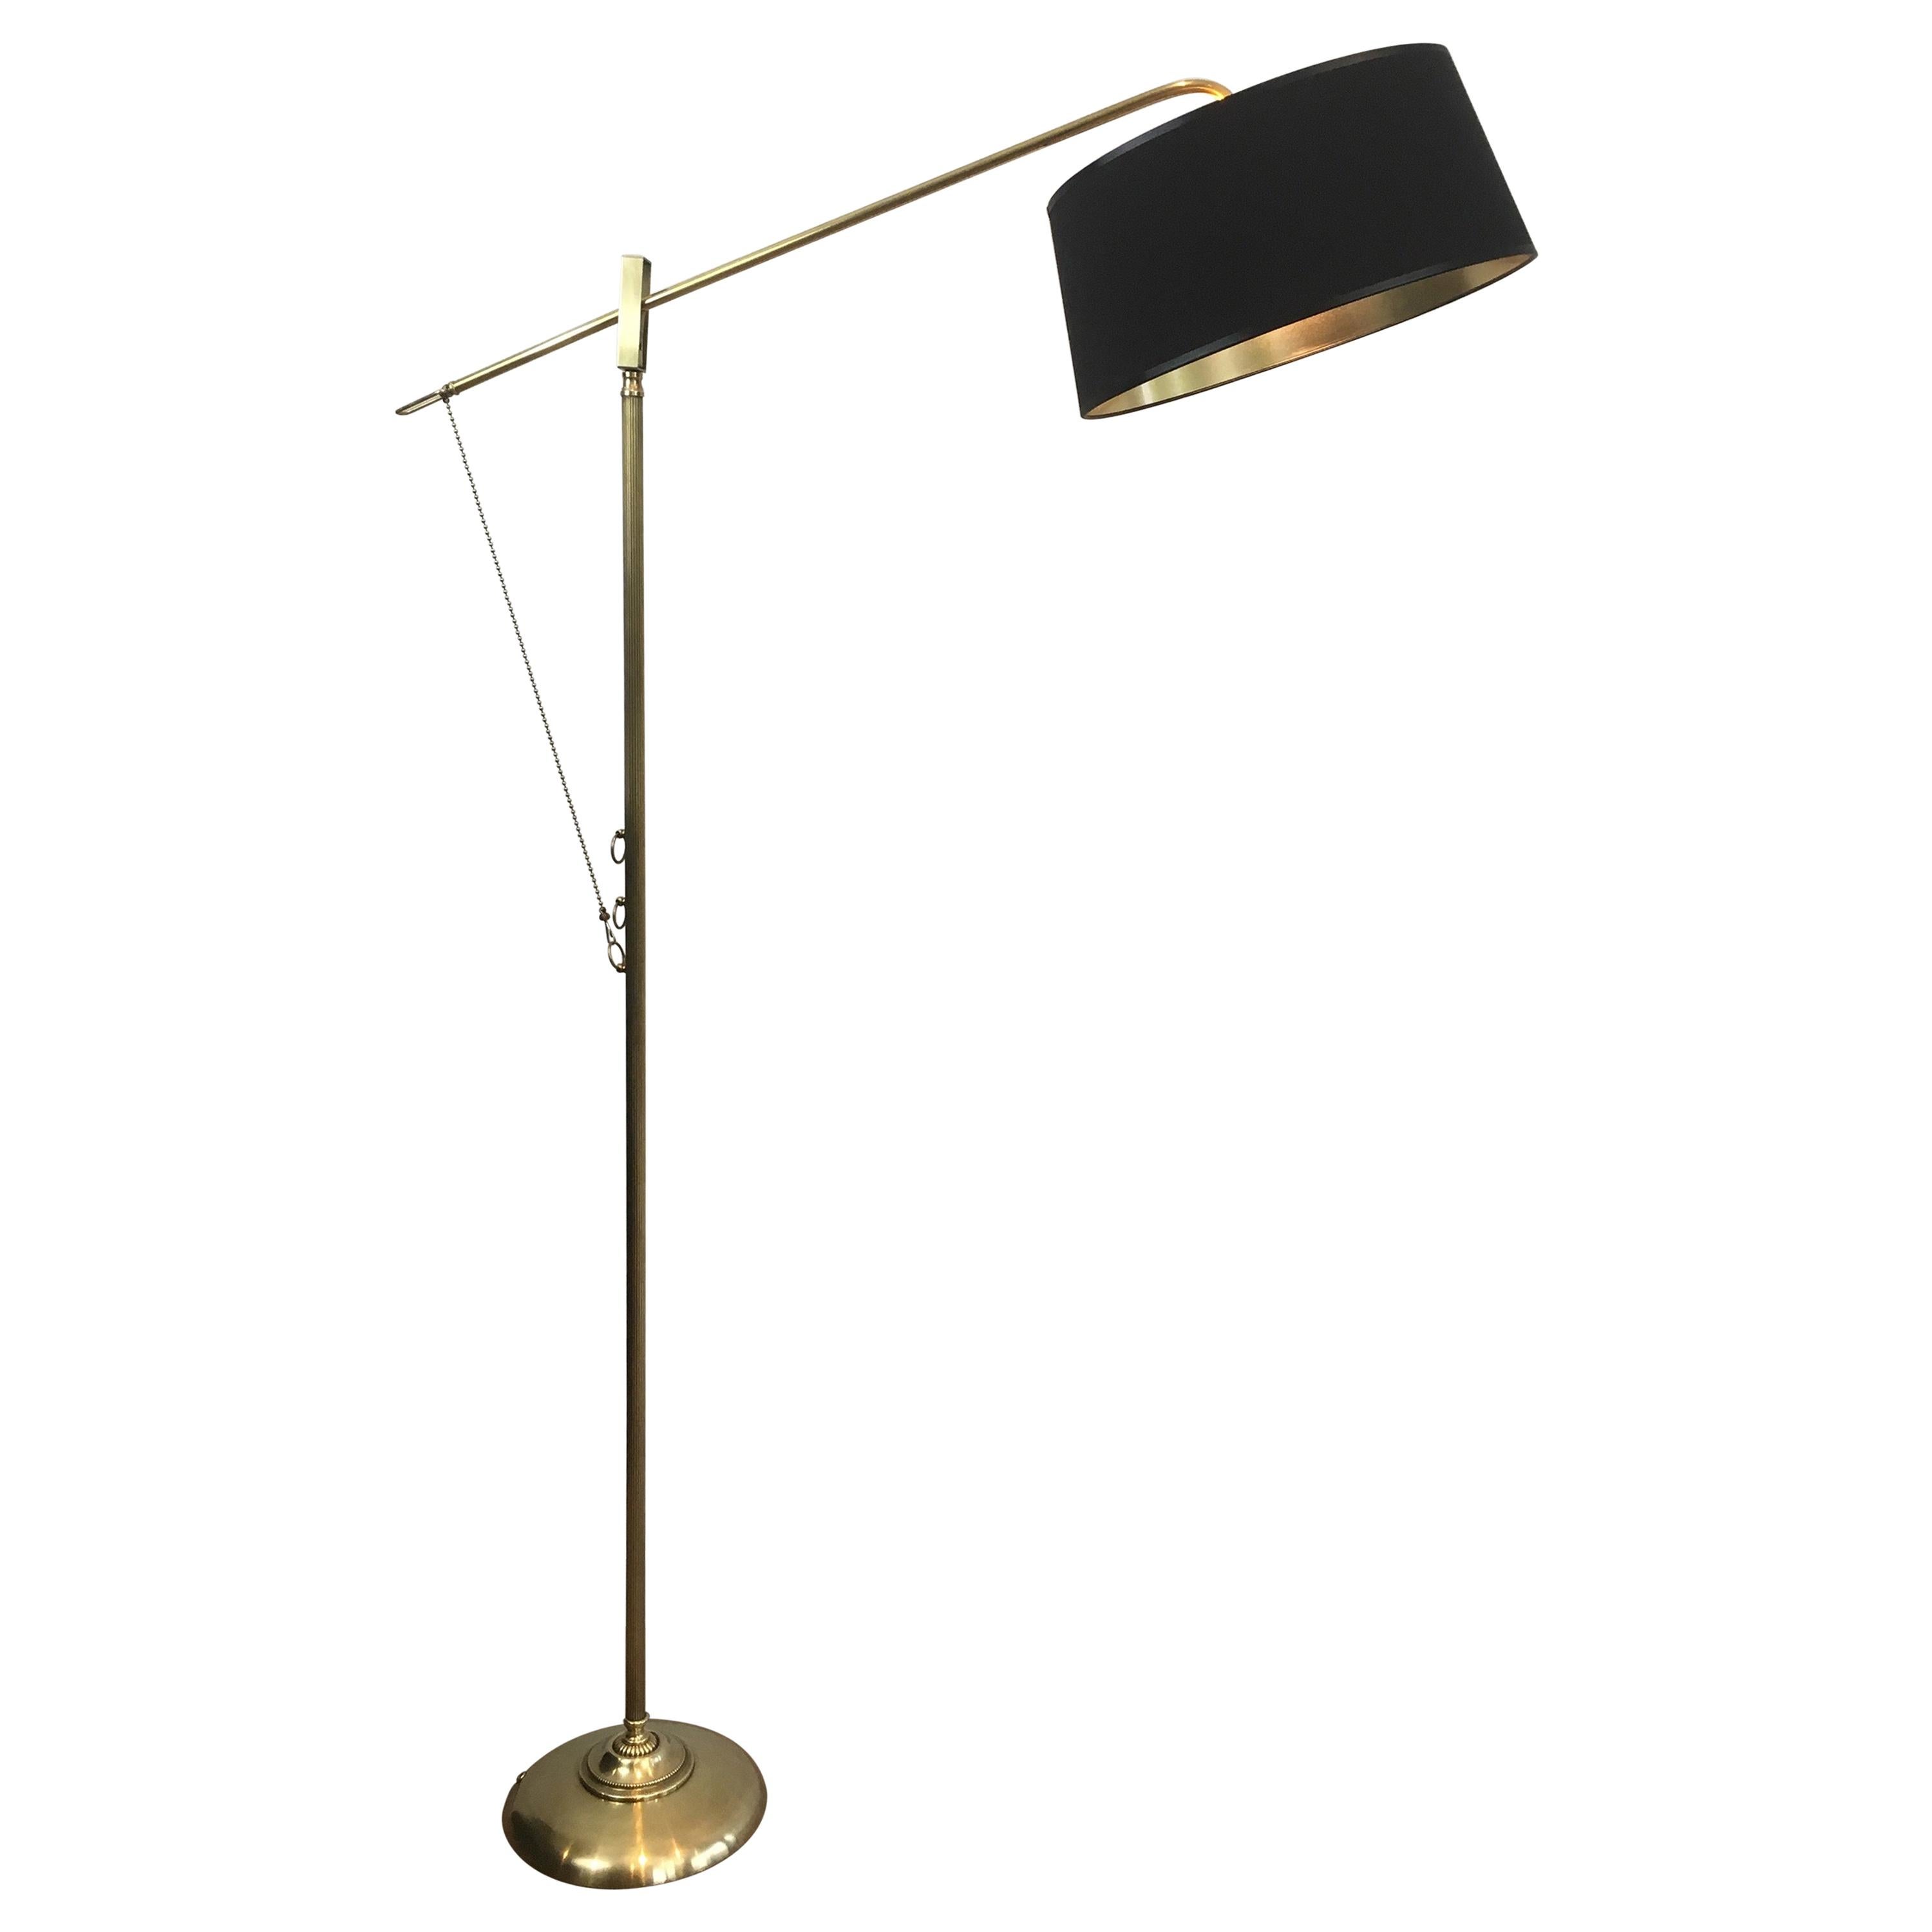 Rare Swinging Turning Brass Floor Lamp, French, circa 1940